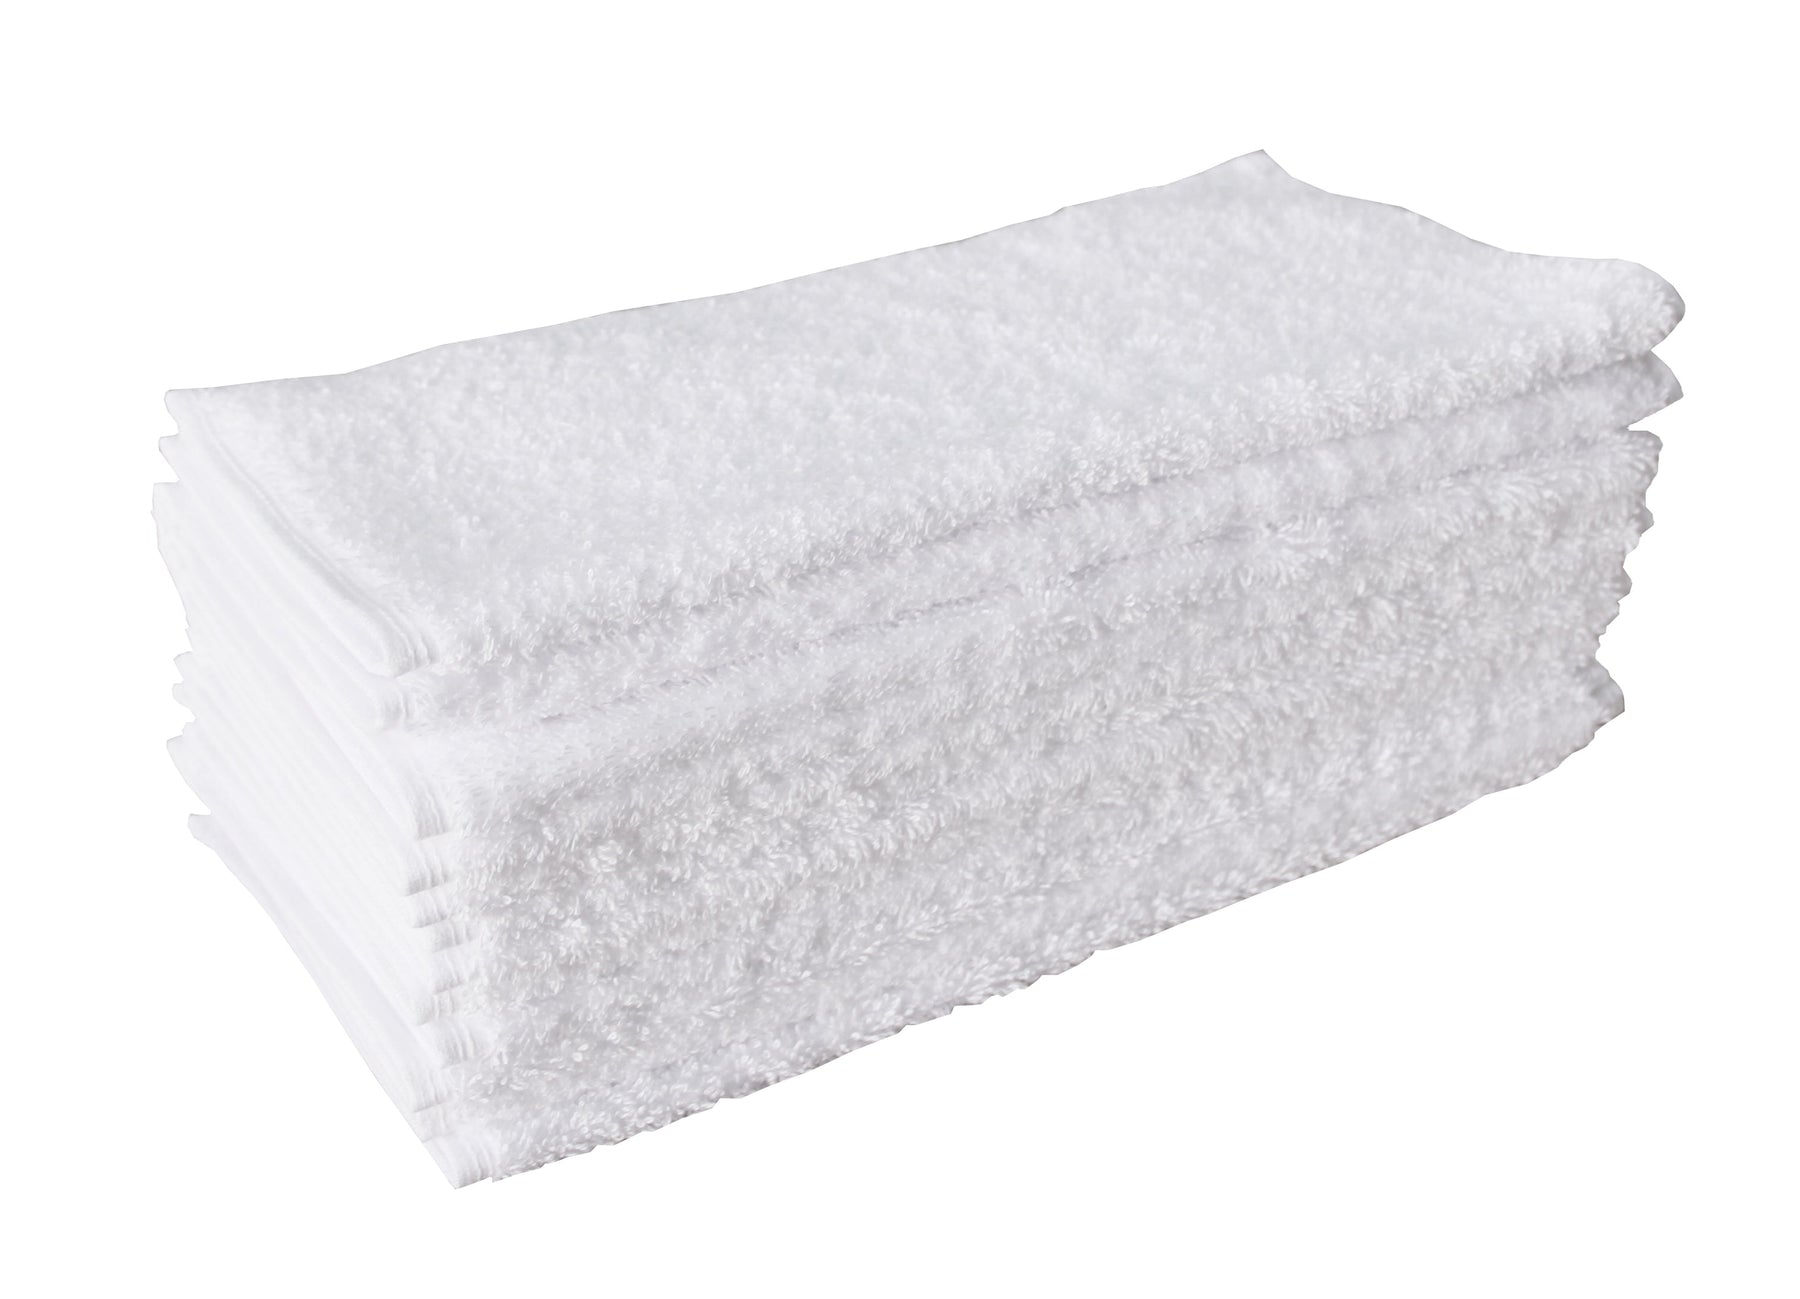 Wholesale White Bath Sheets 75 x 154cm 315gsm Eco Friendly Energy Saving